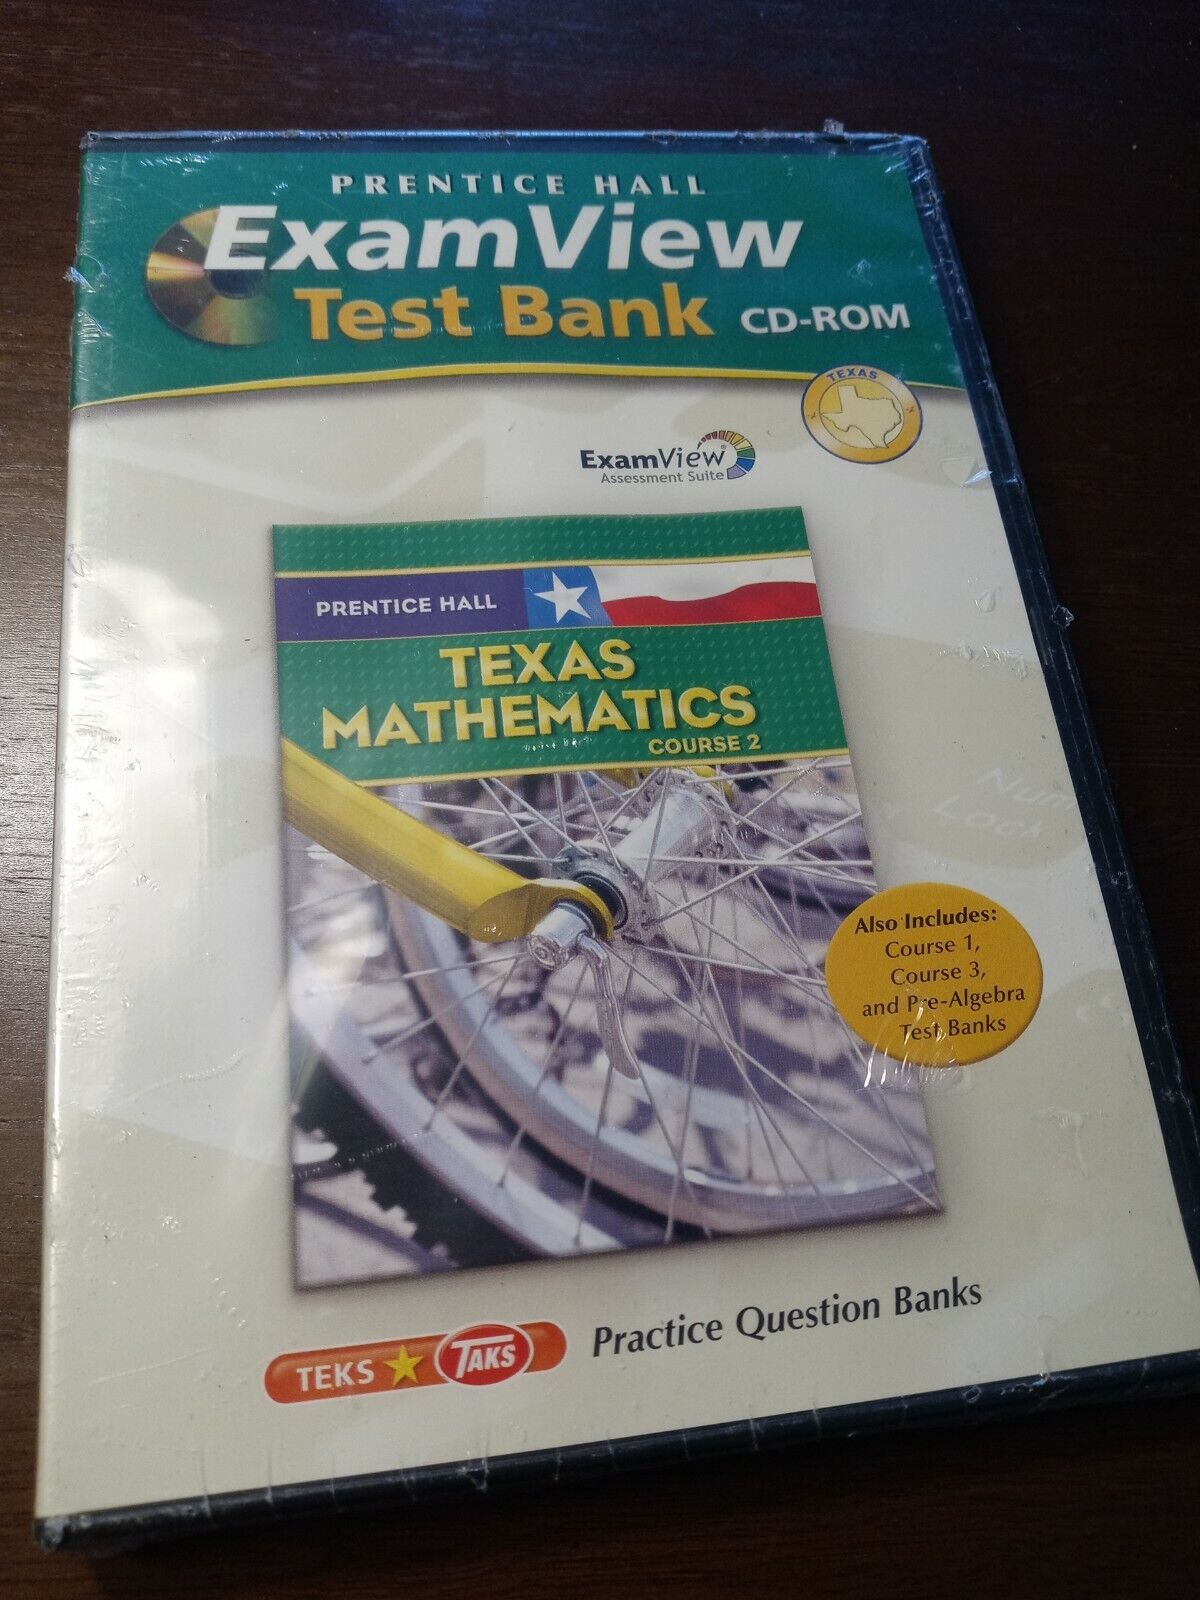 Prentice Hall Texas Mathematics Course 2 Exam View Test Bank CD-ROM